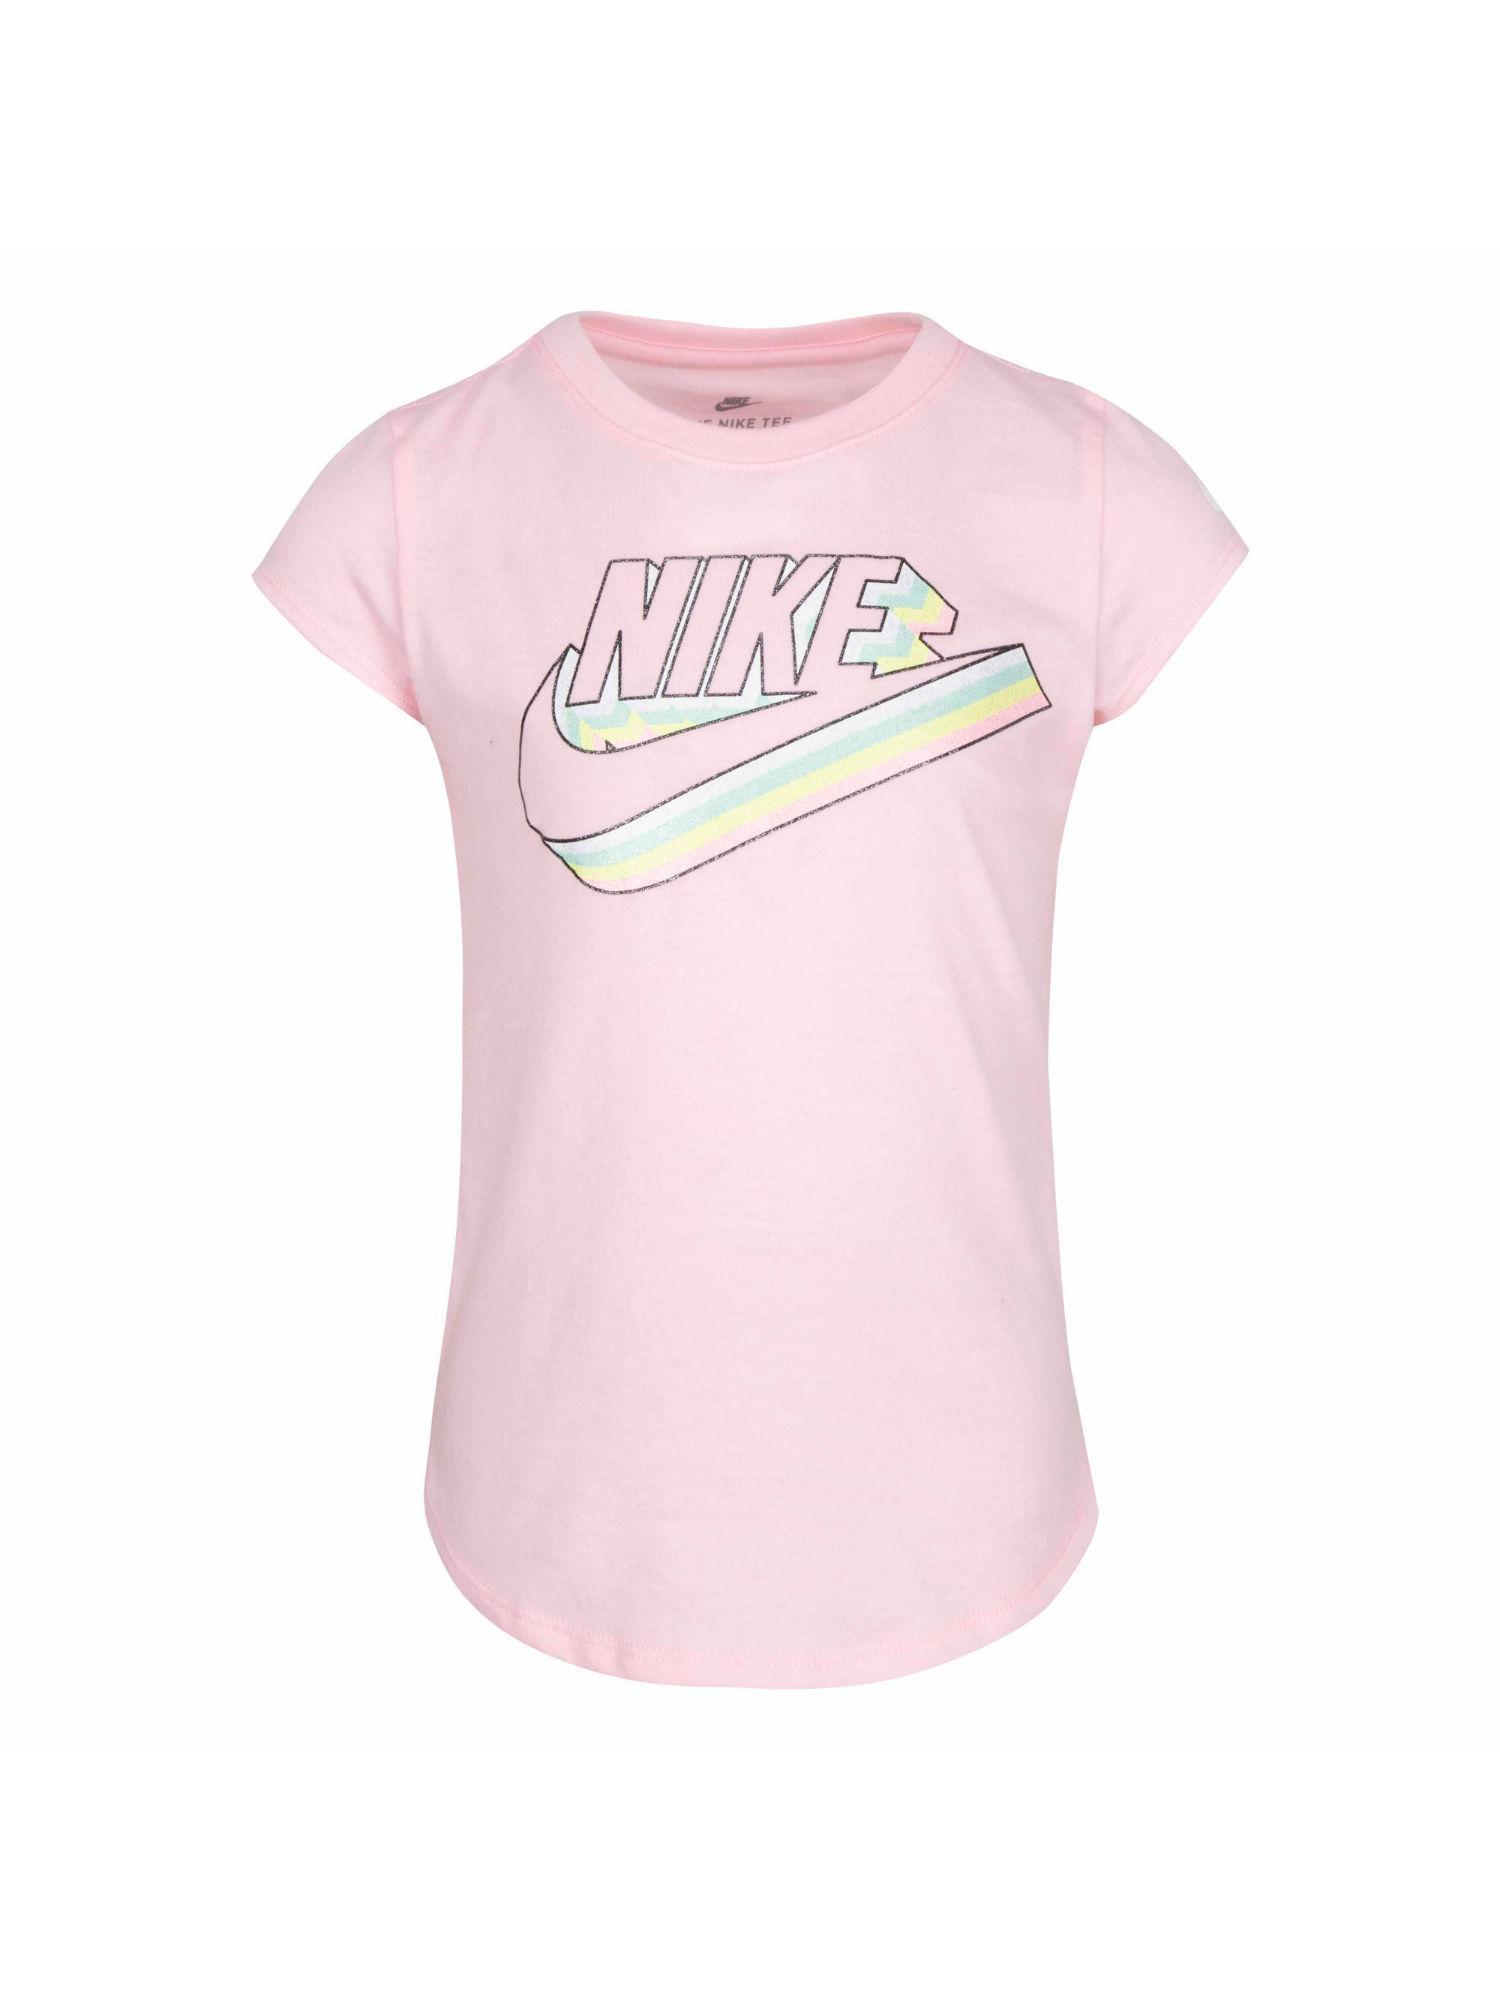 girls pink graphic t-shirt